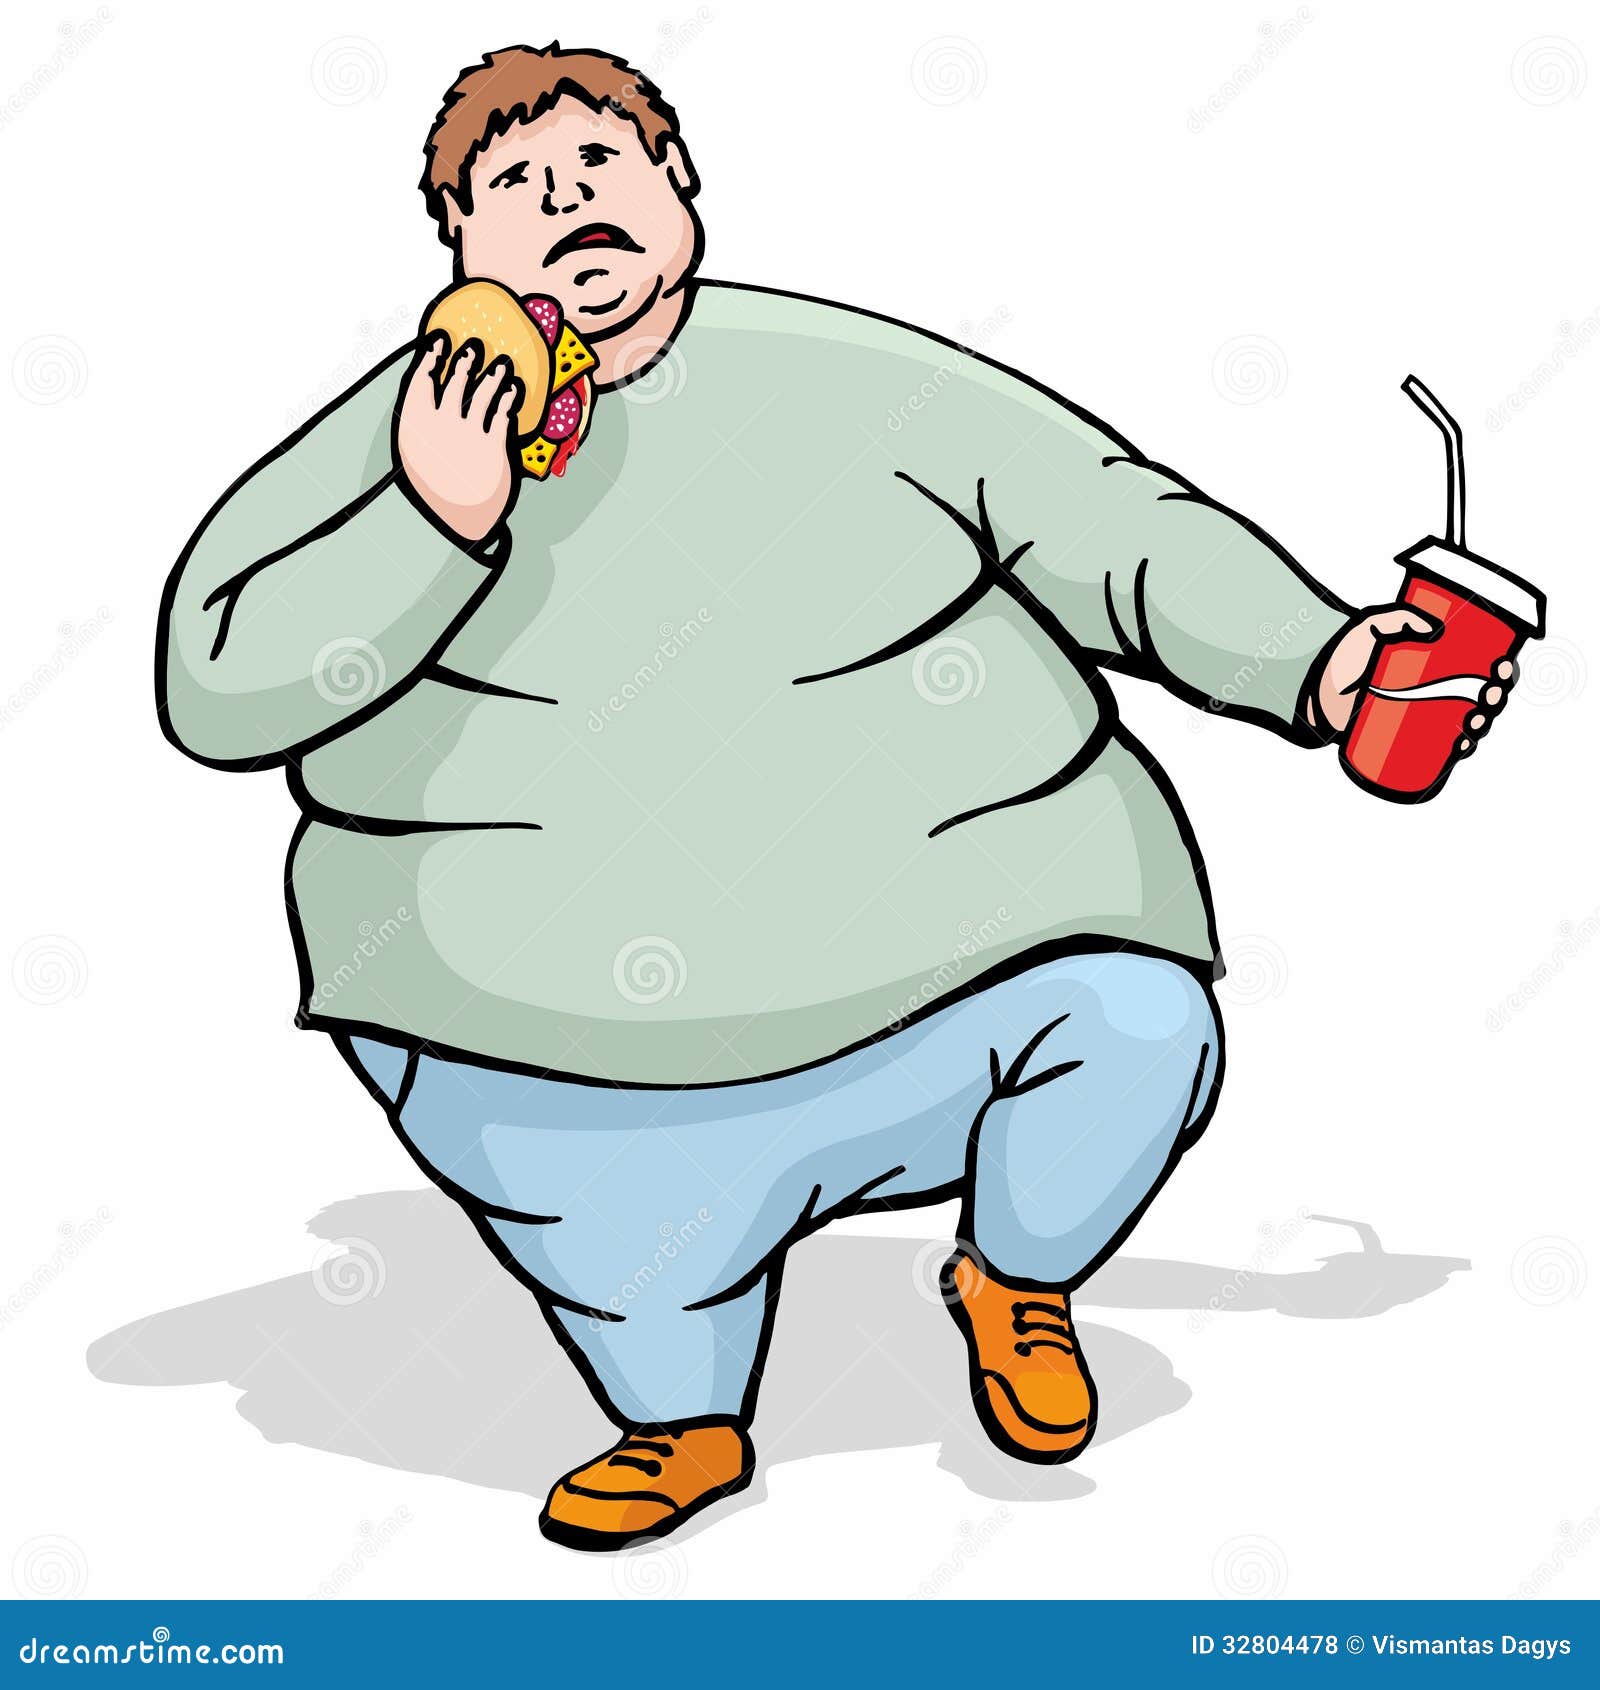 Clip Art Of Fat People 113